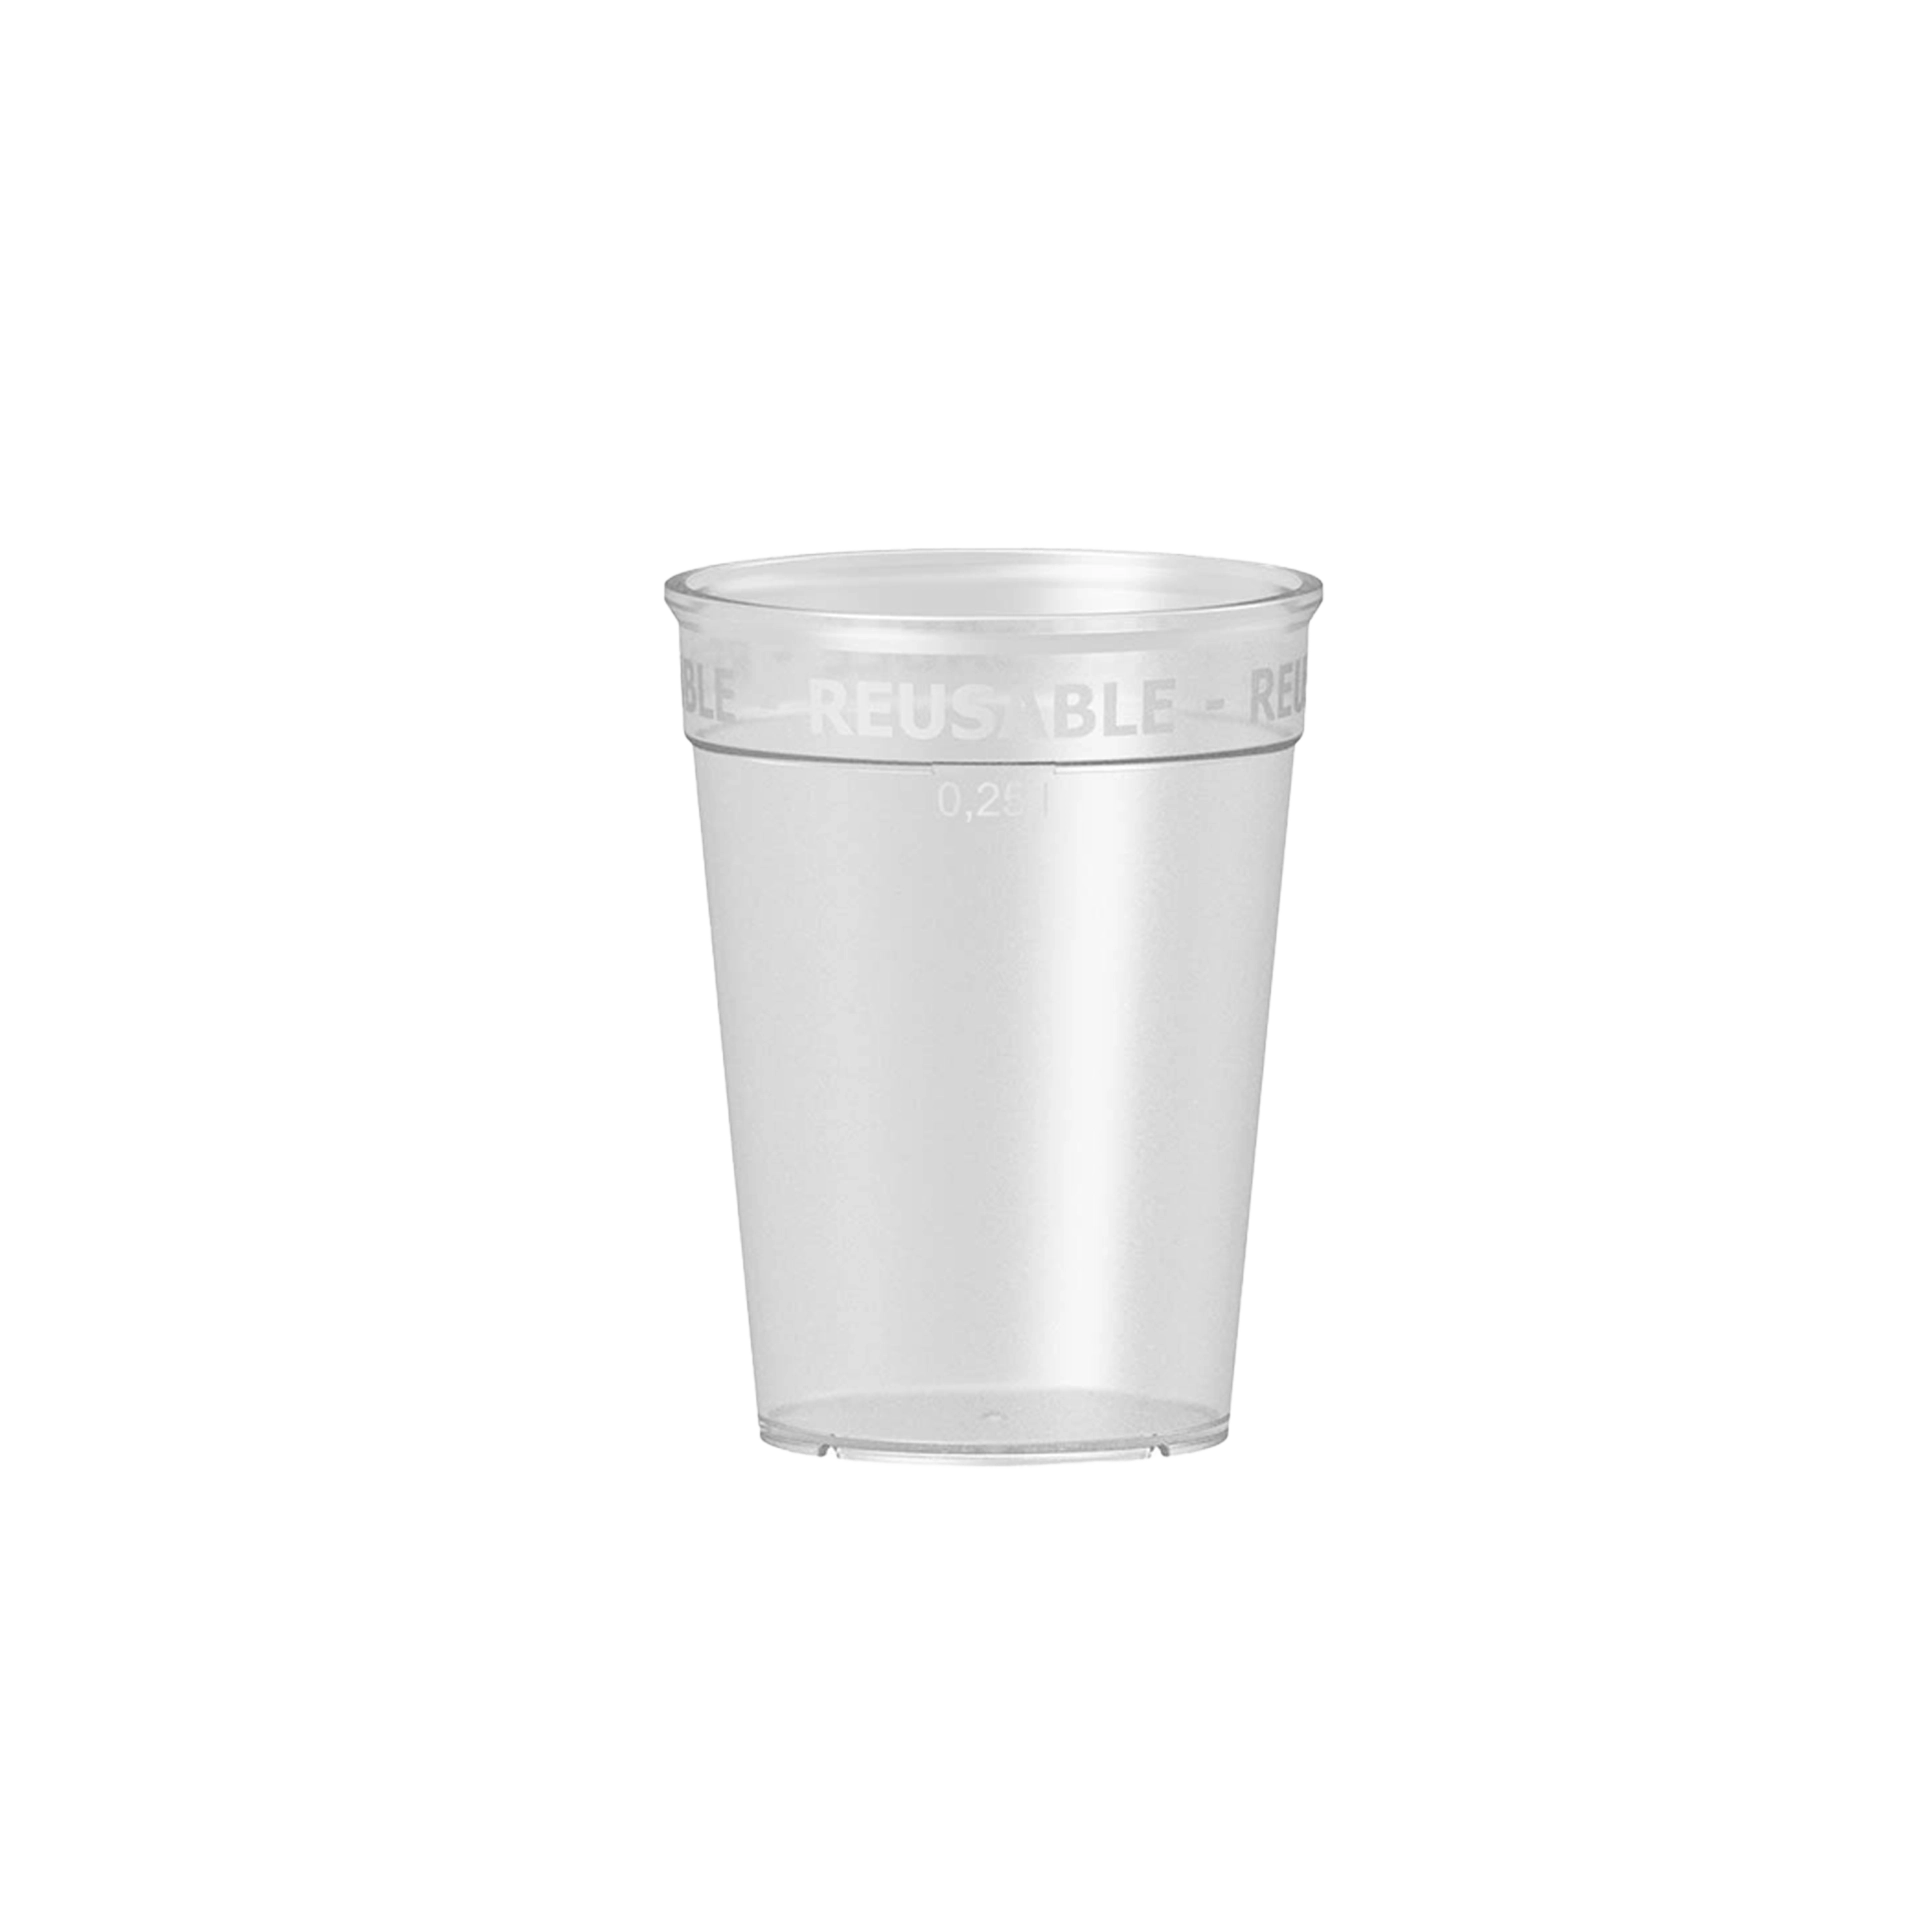 Bicchiere WellnessEcocup reusablePP trasparente opacoØ sopra 80 mm | h 103320 ml - 0,25 lInfrangibile, 1.000 risciacqui utilizzabile in microonde, riciclabile 